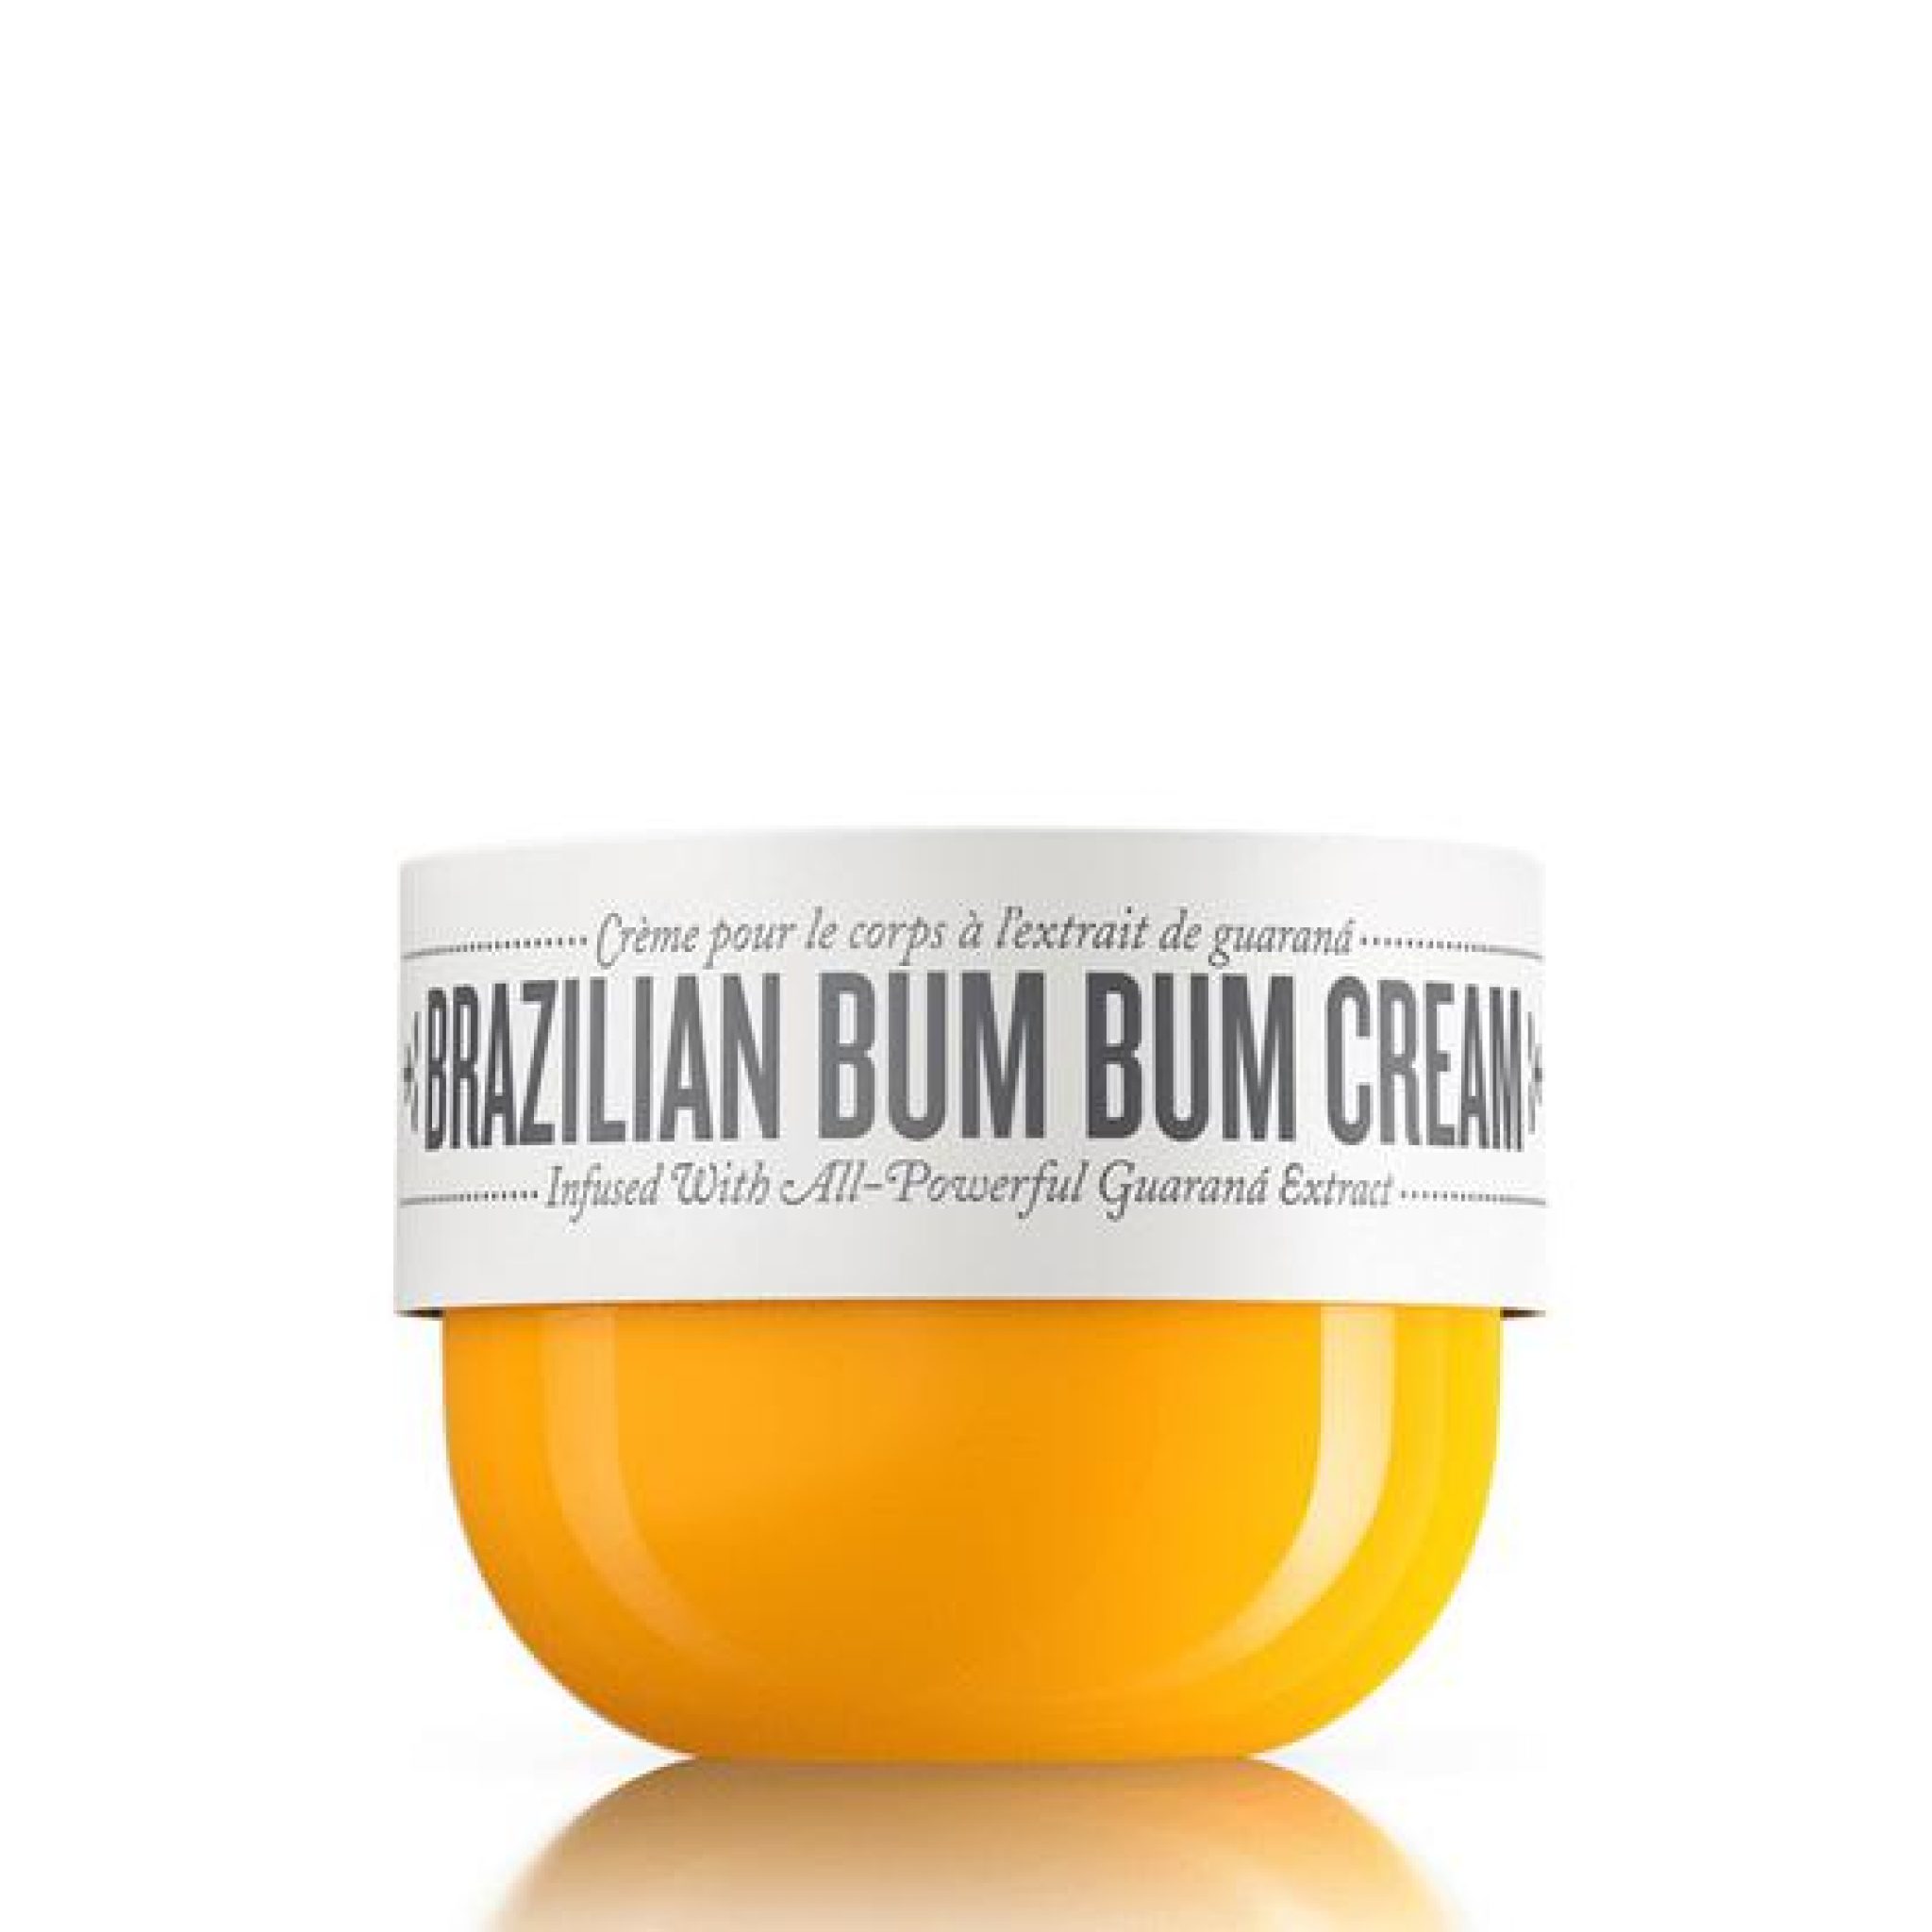 Brazilian Bum Bum Cream - Sol de Janeiro review